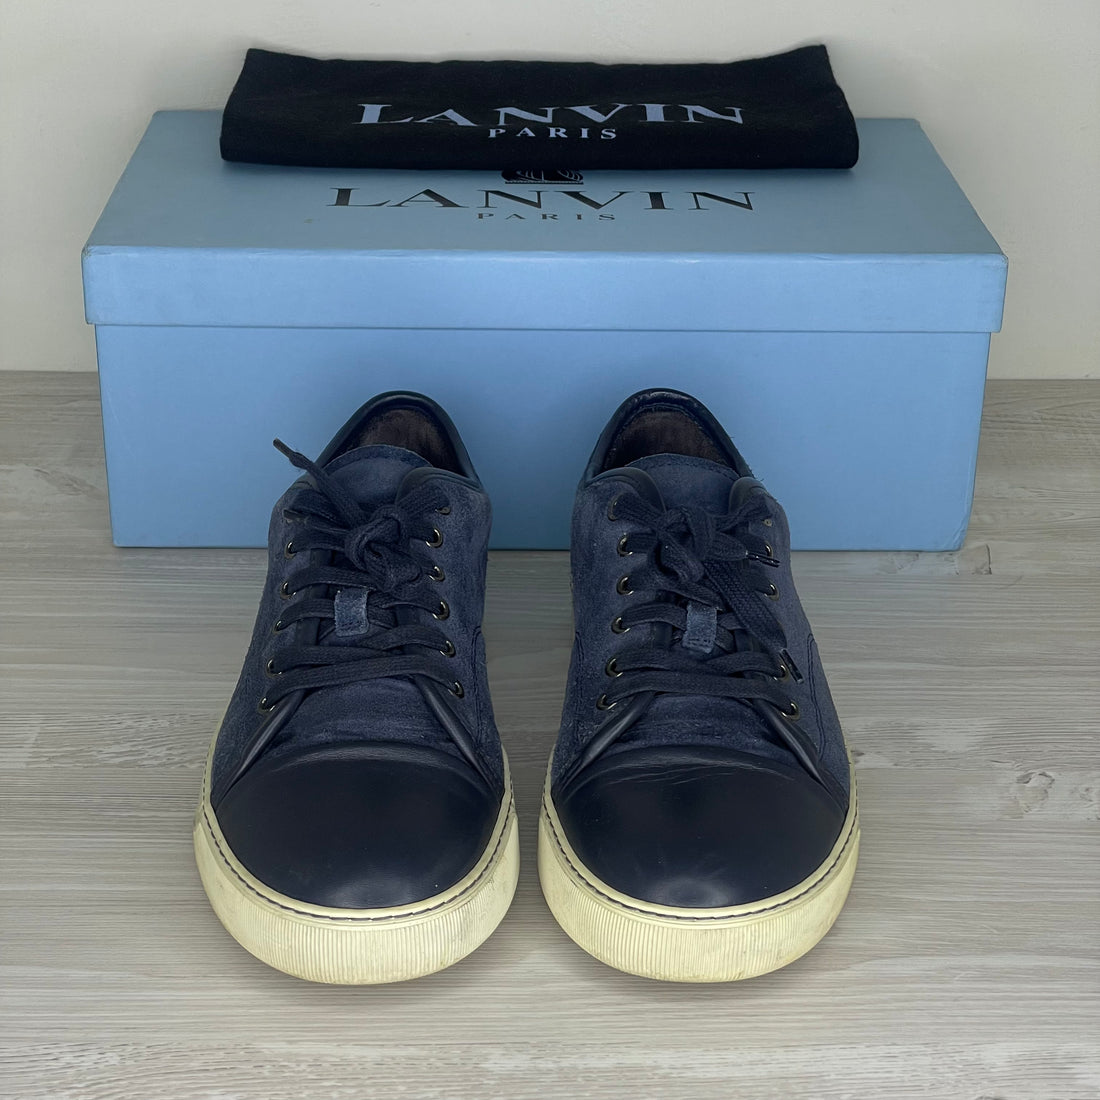 Lanvin Sneakers, Dark Blue Suede &